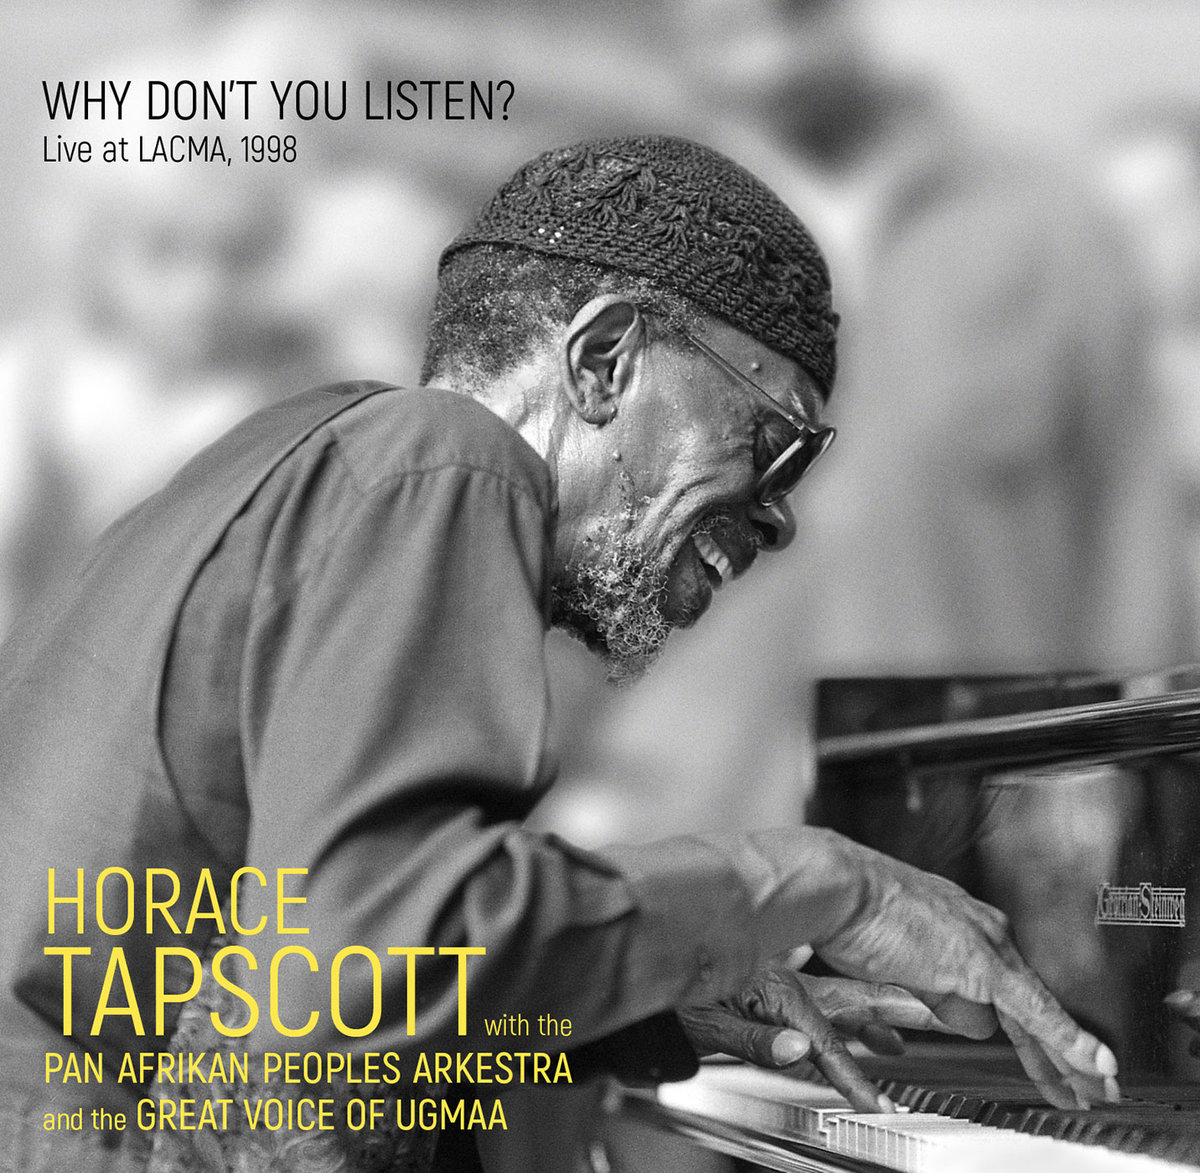 Il meglio del jazz 2019 Top 20 album -Horace Tapscott